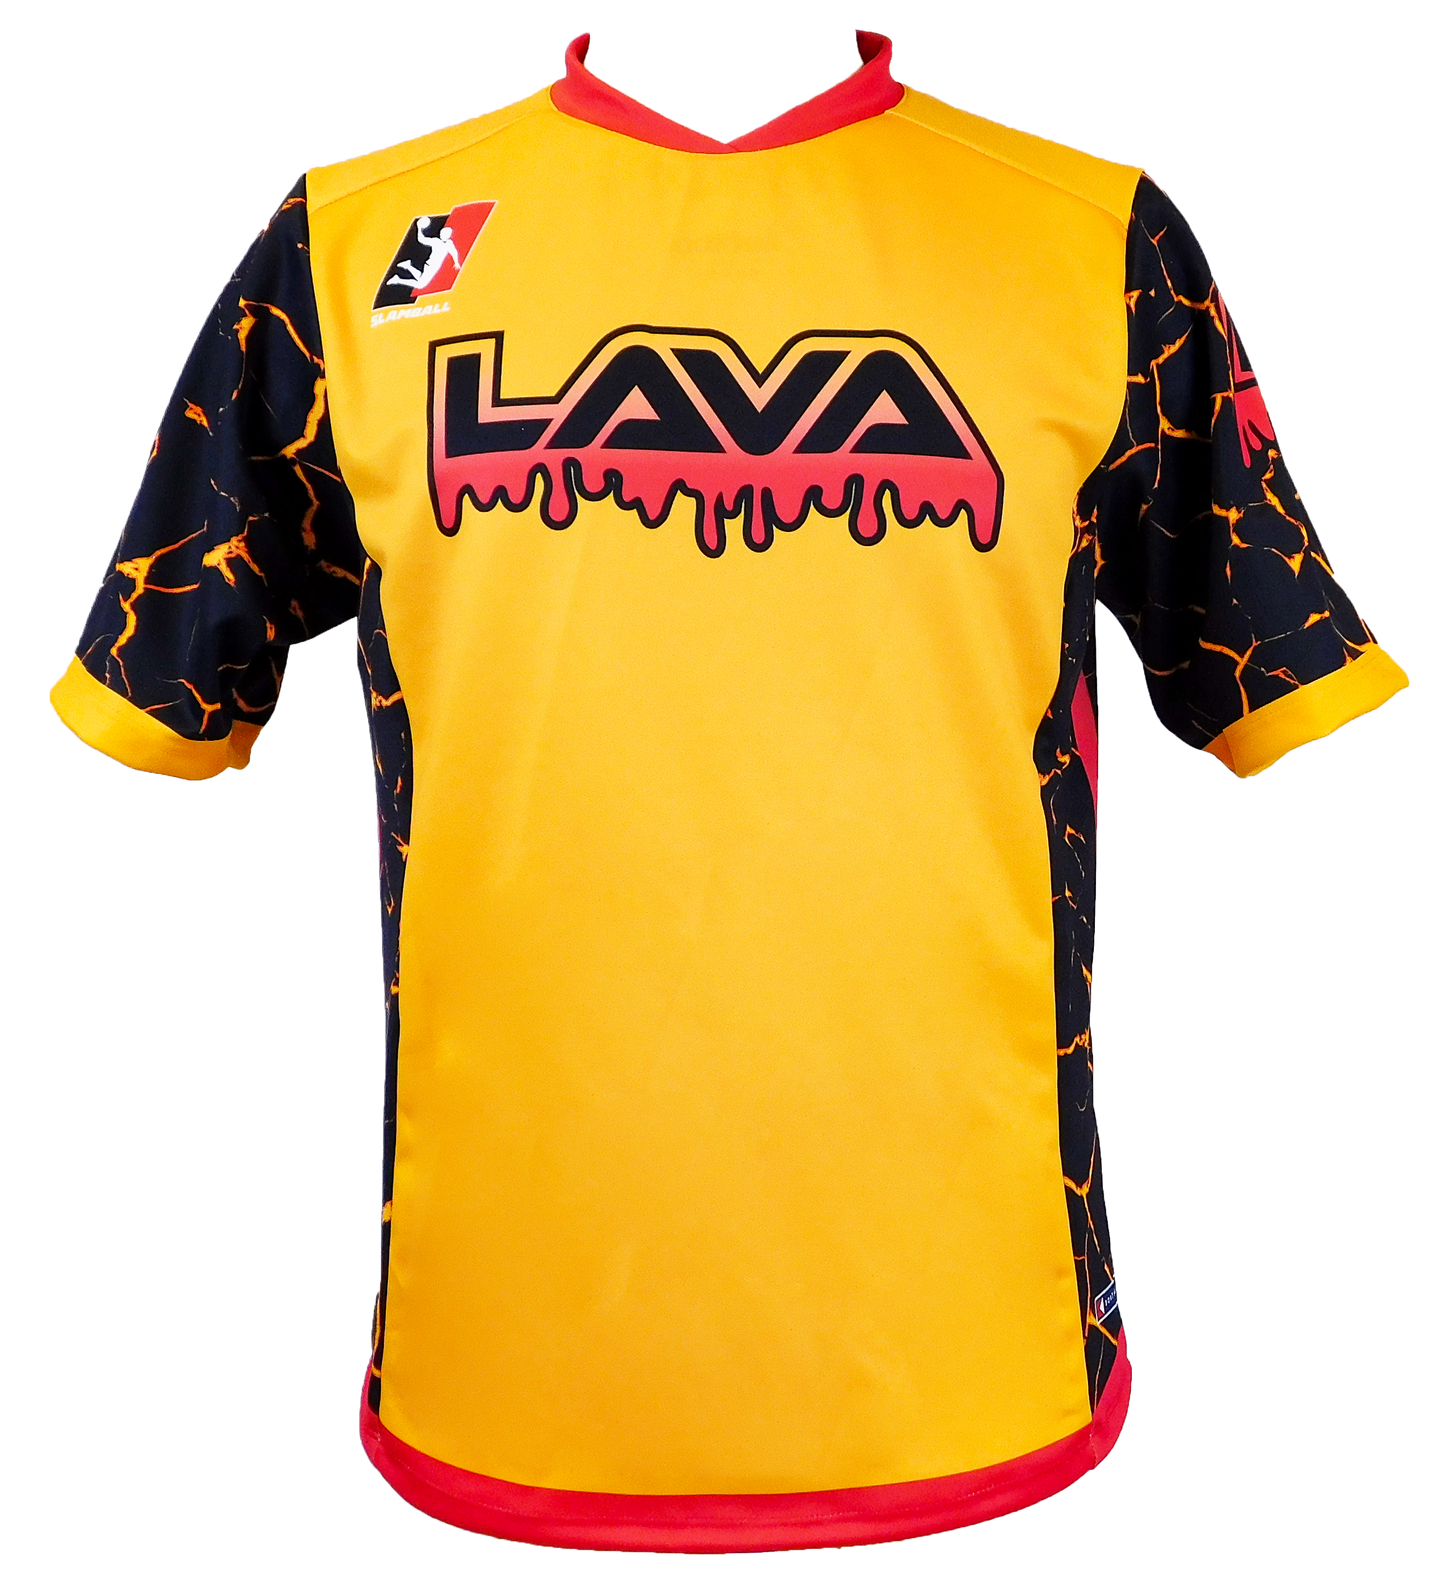 LAVA - Team Jersey - Athletic Gold / Black